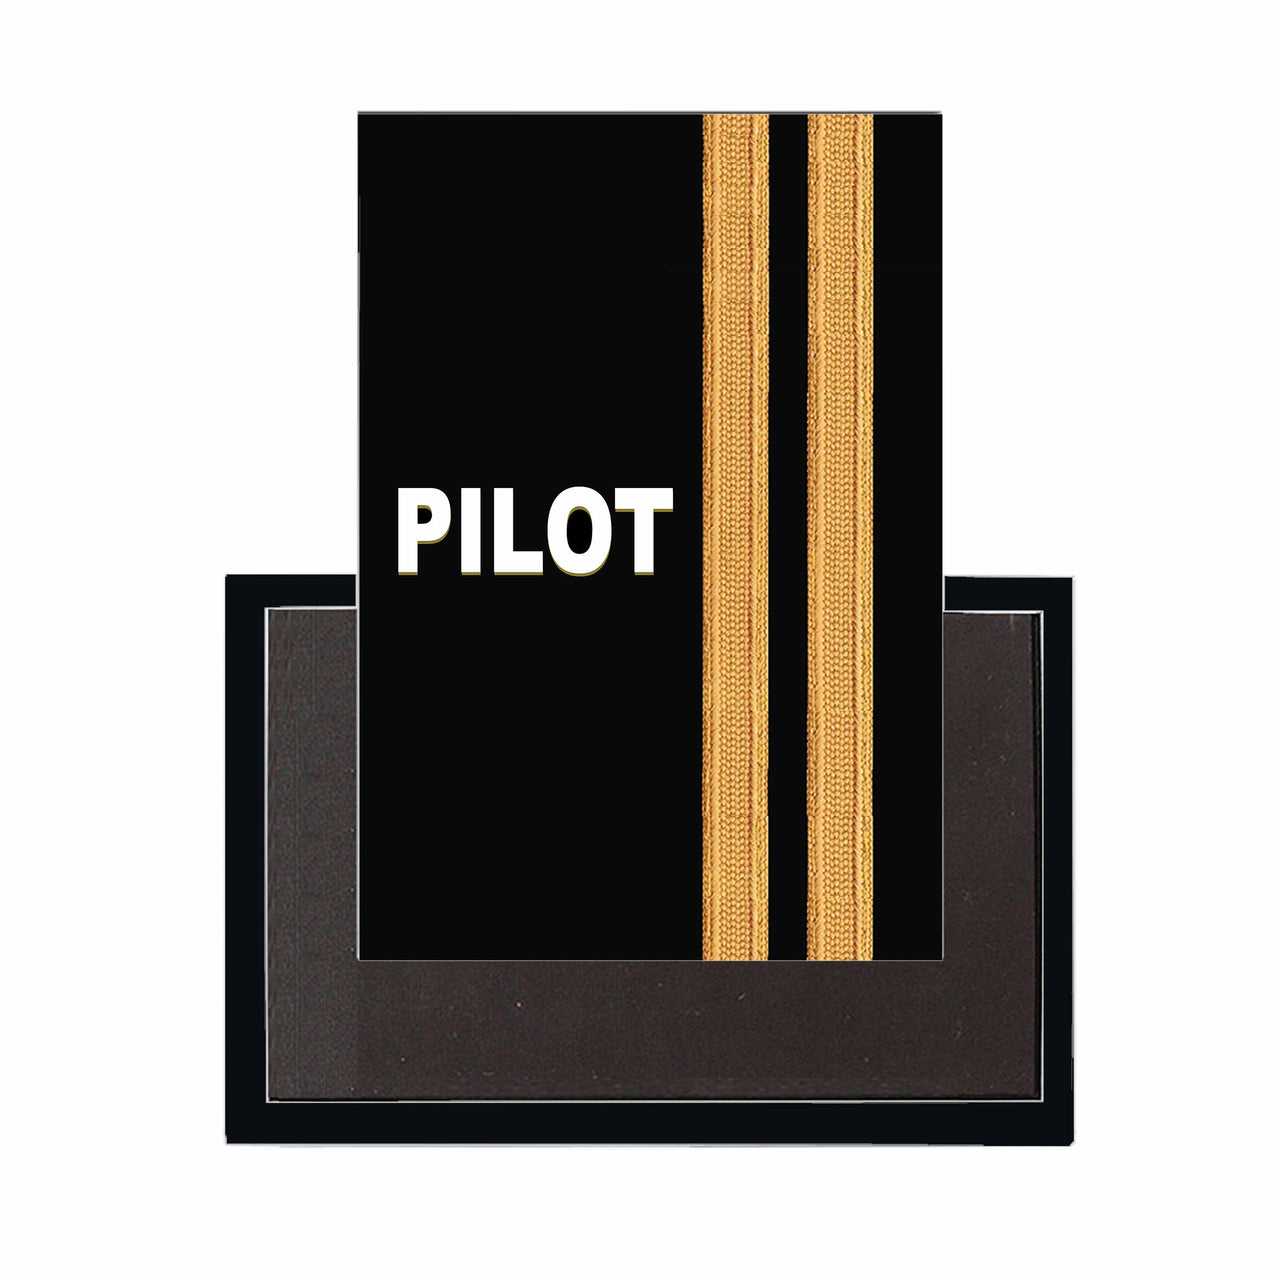 PILOT & Epaulettes 2 Lines Designed Magnets